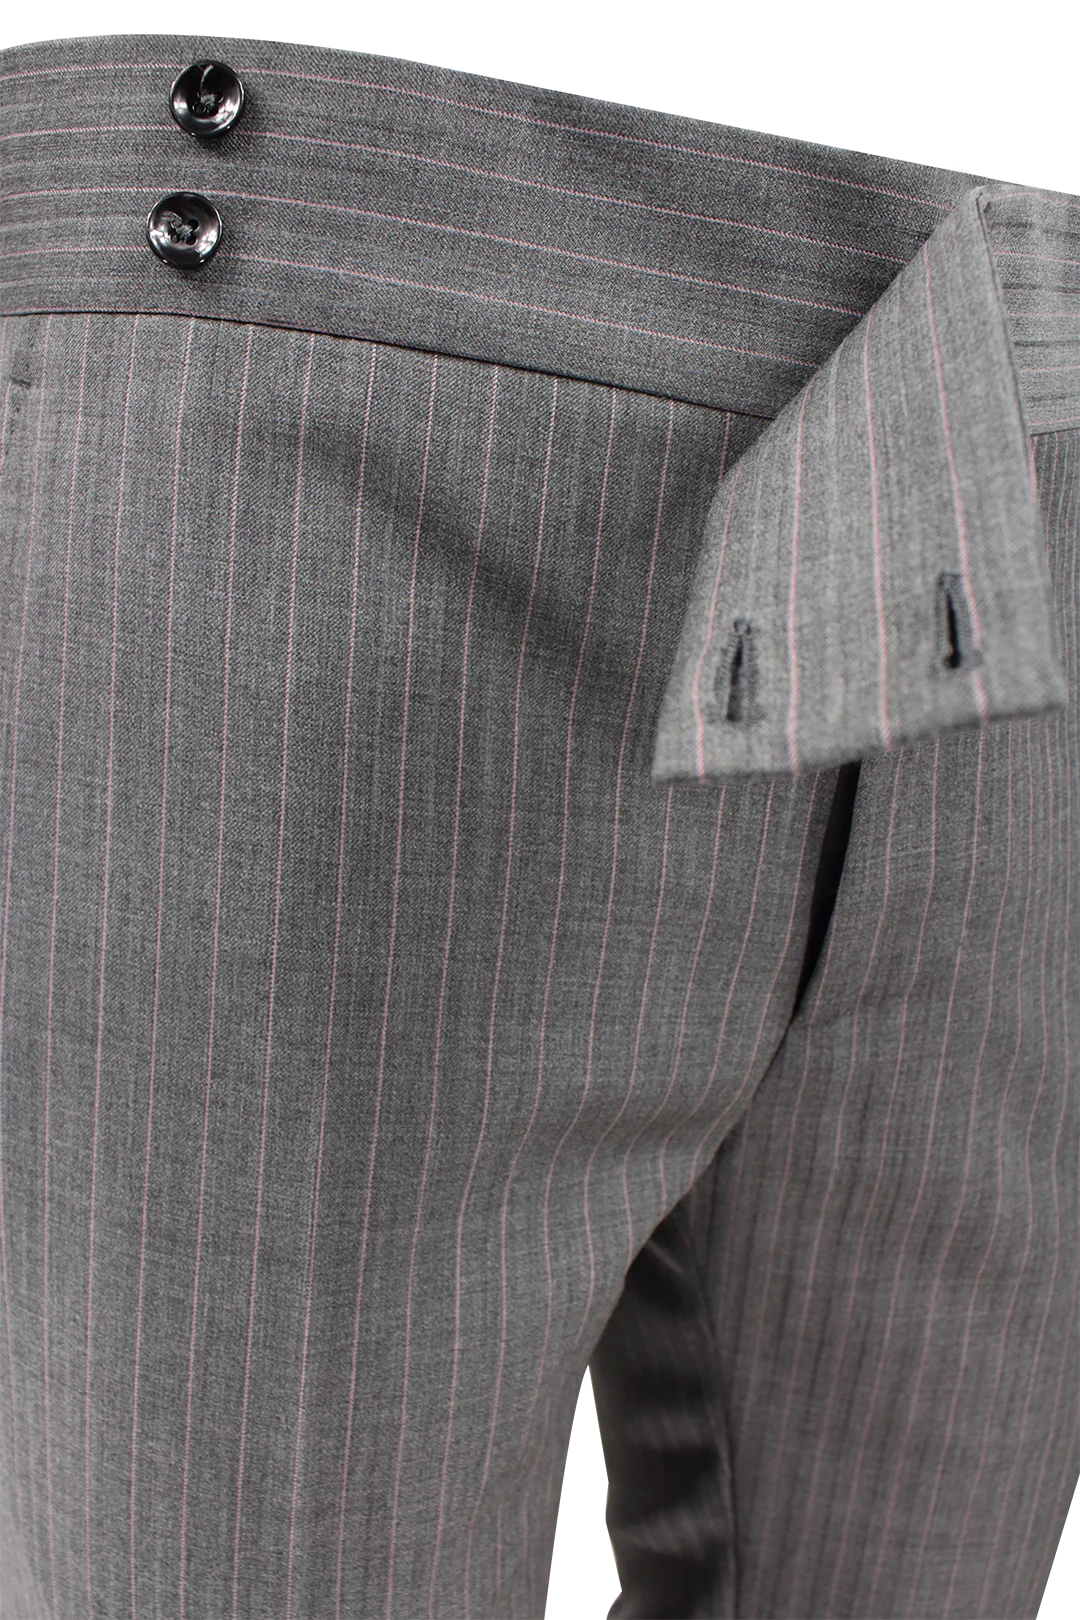 Pantalone cinta sartoriale lana grigia gessata bottoni